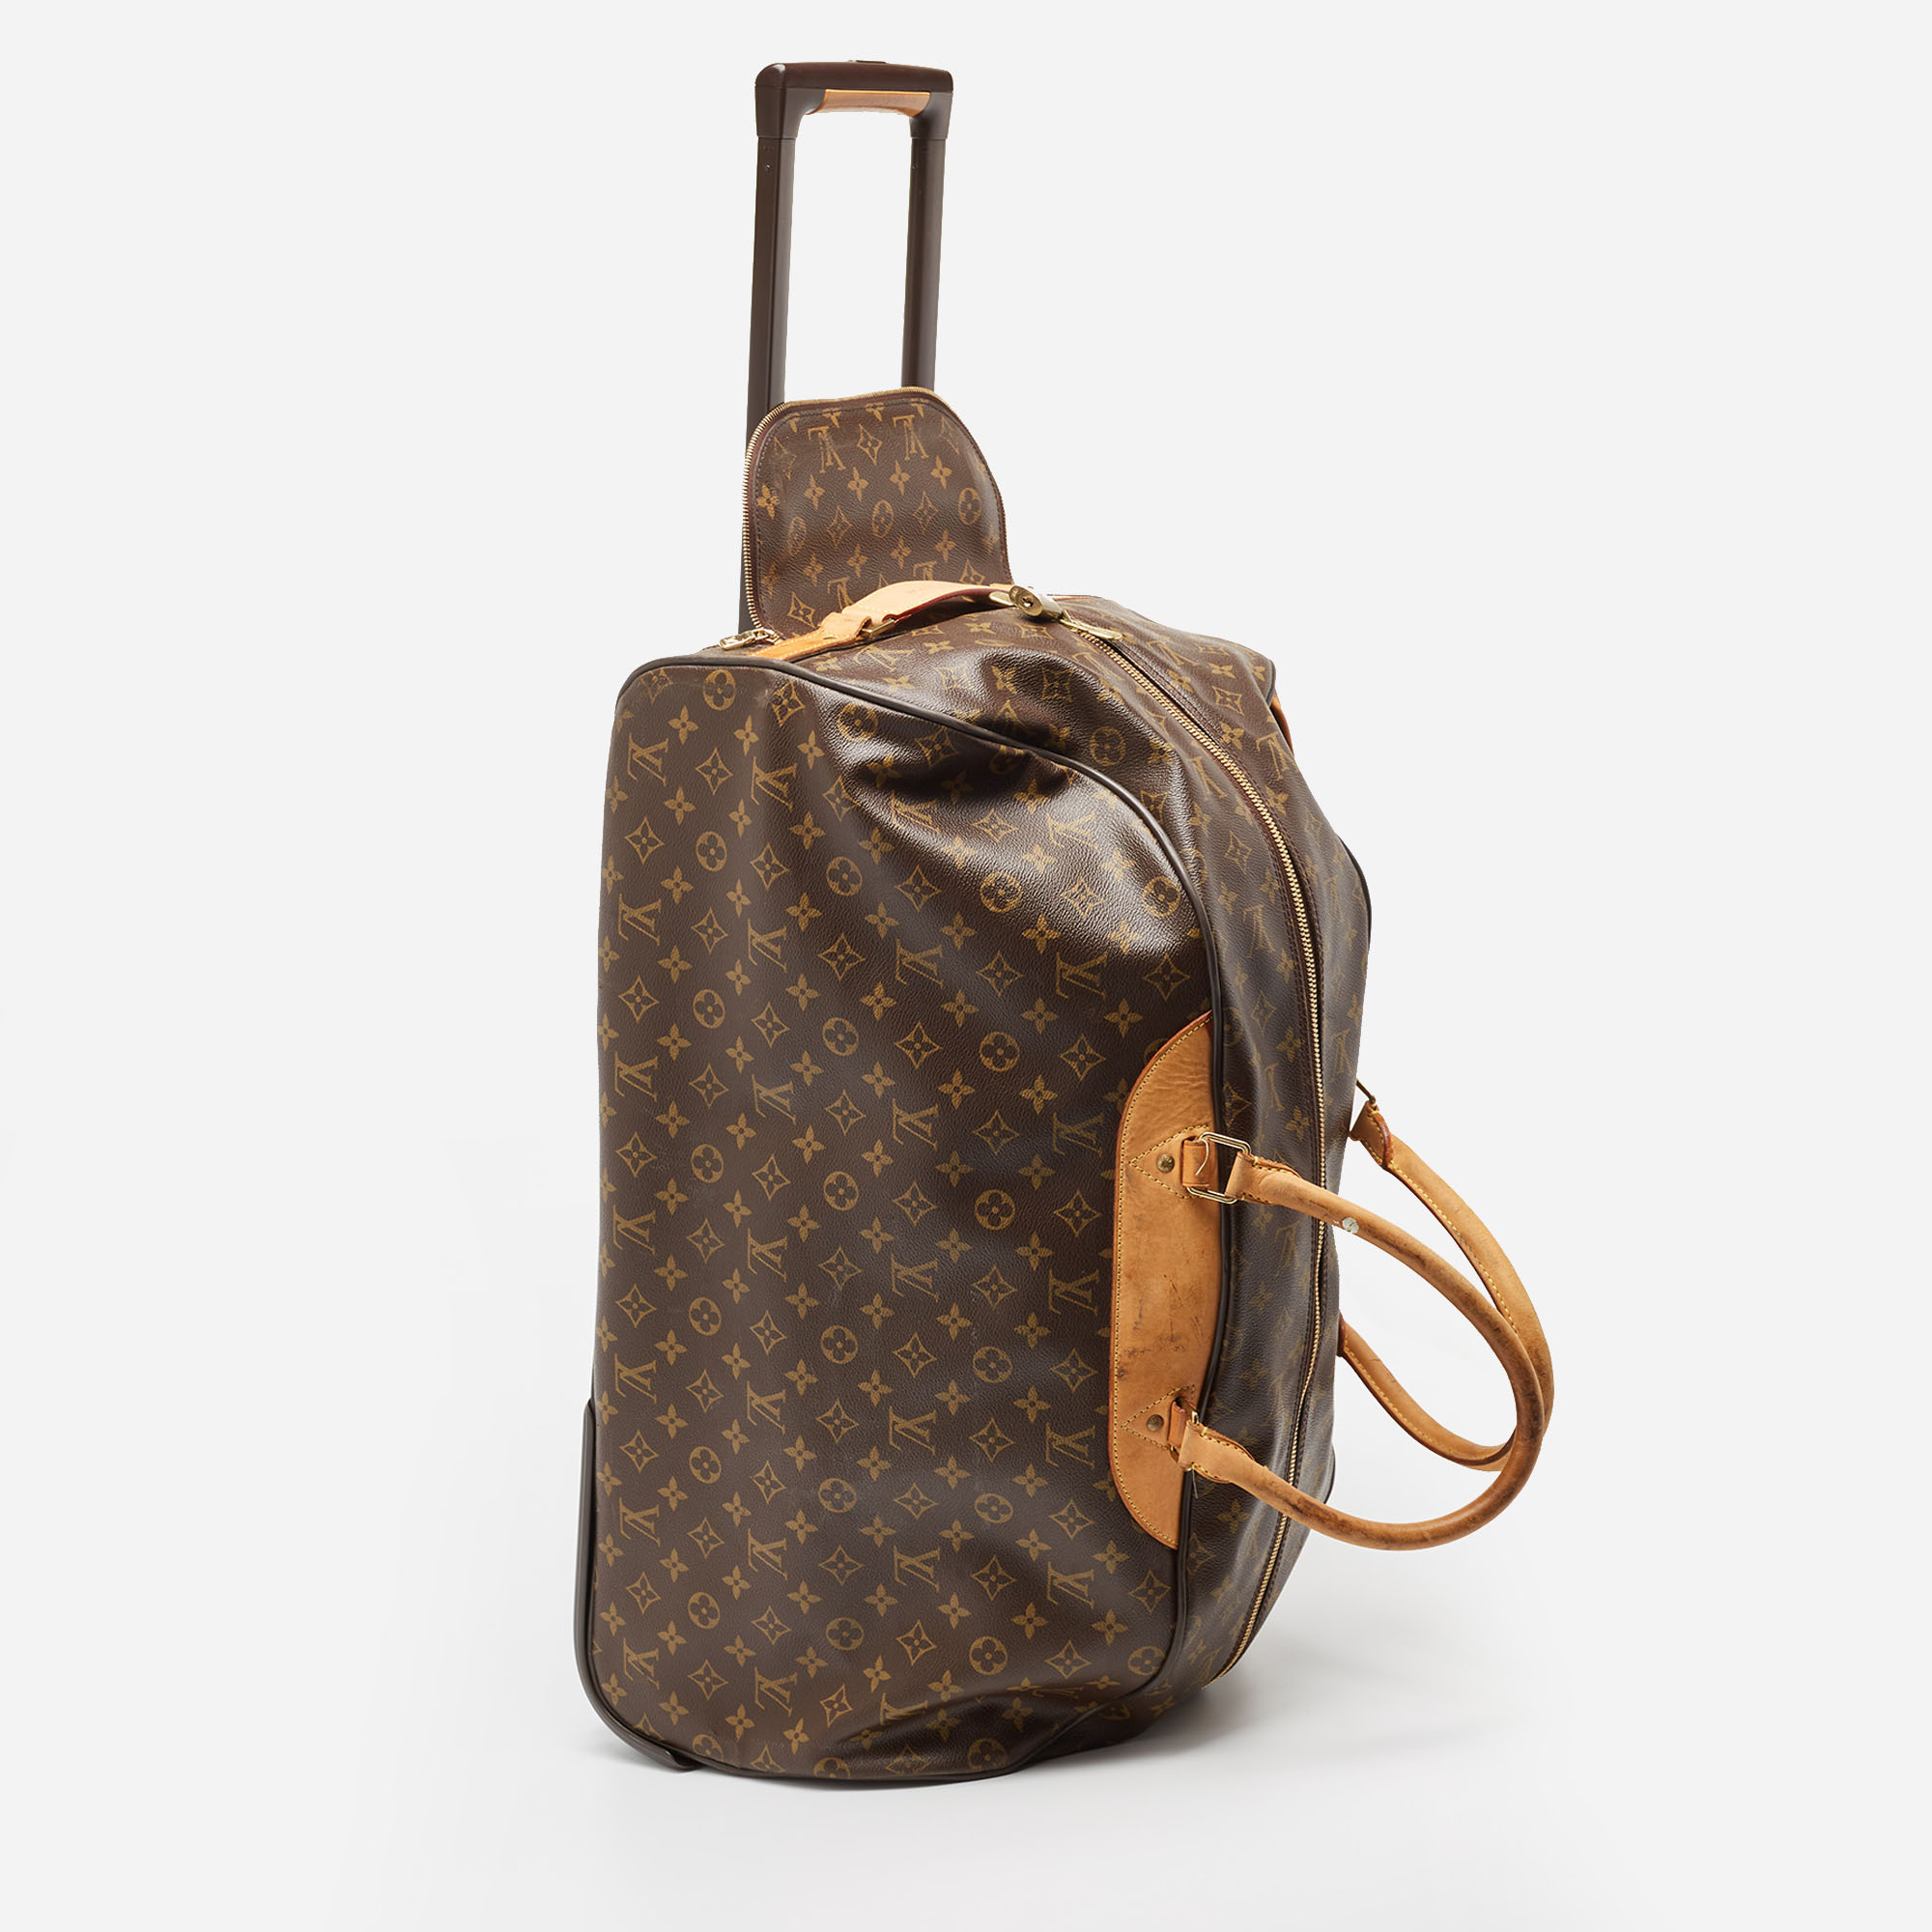 Louis Vuitton Monogram Canvas Eole 60 Luggage Bag